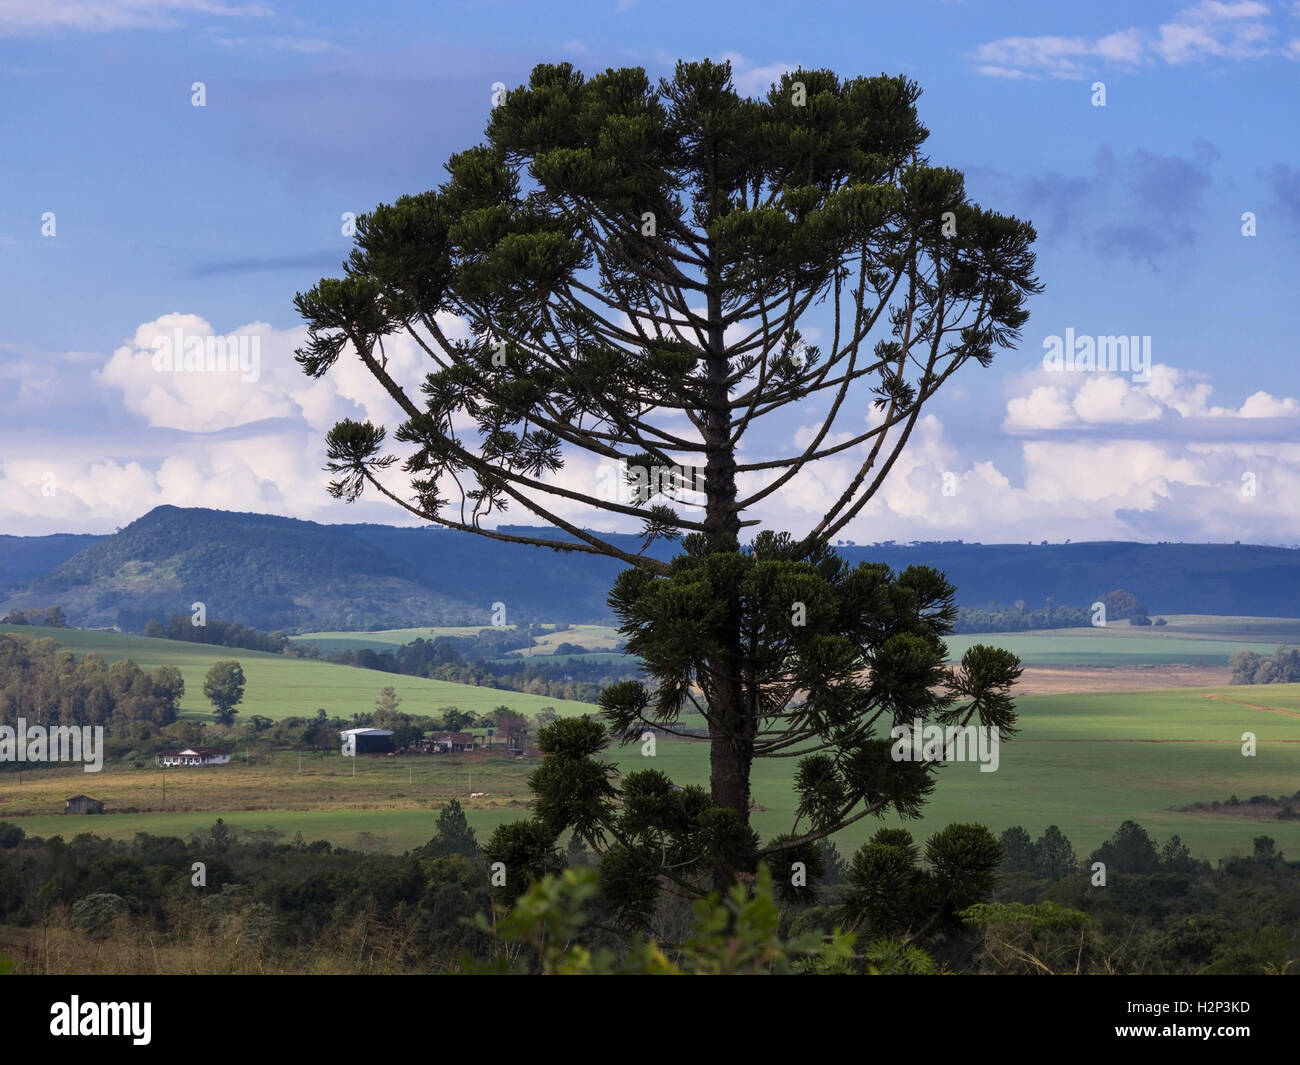 Araucaria tree (Araucaria angustifolia) in rural Tamarana County, State of Parana, Brazil. Stock Photo